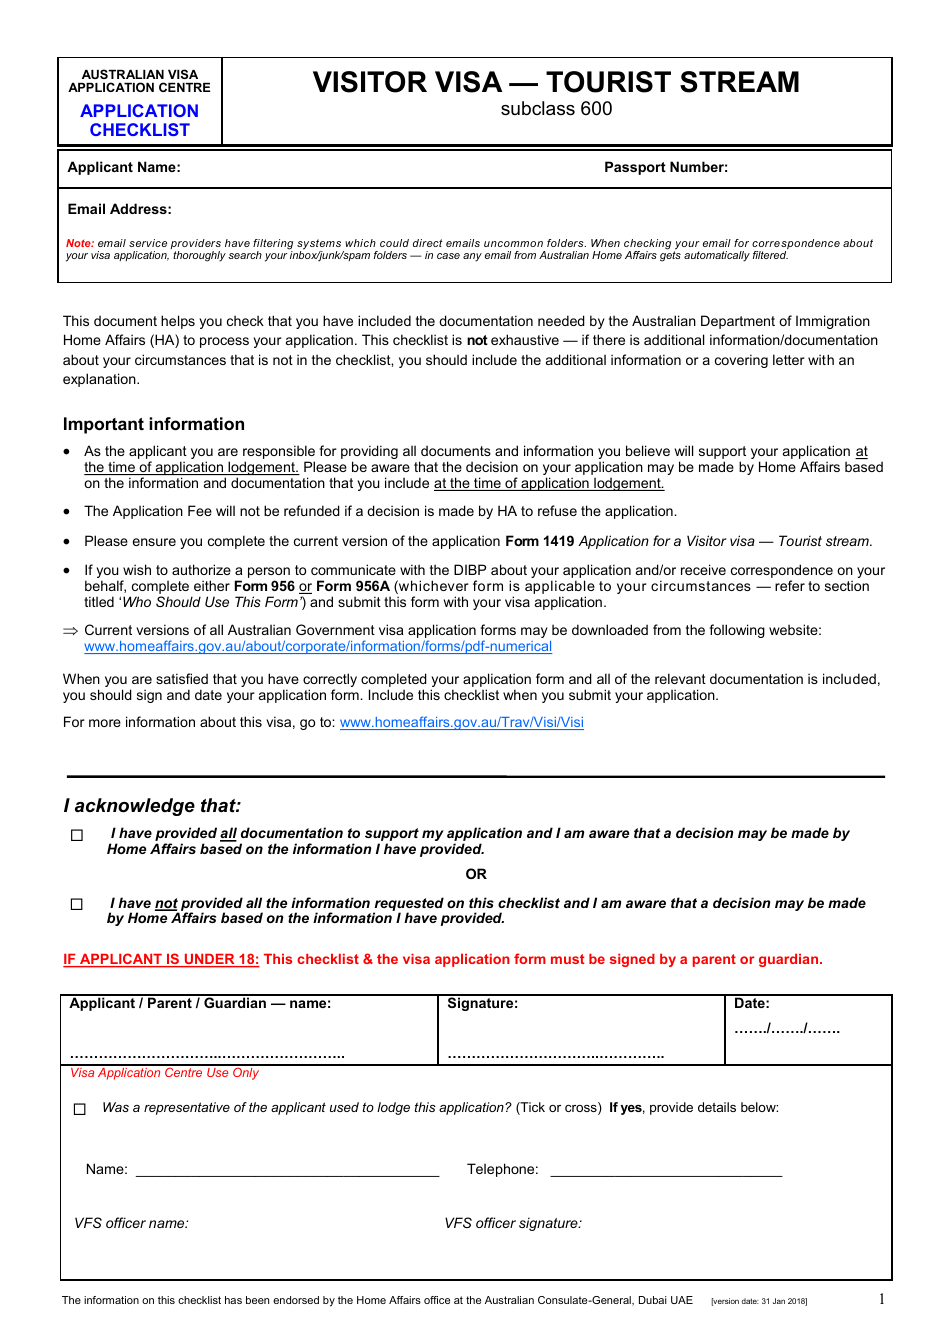 Australian Tourist Visa Application Checklist - Australian Visa Application Centre - Dubai, United Arab Emirates, Page 1